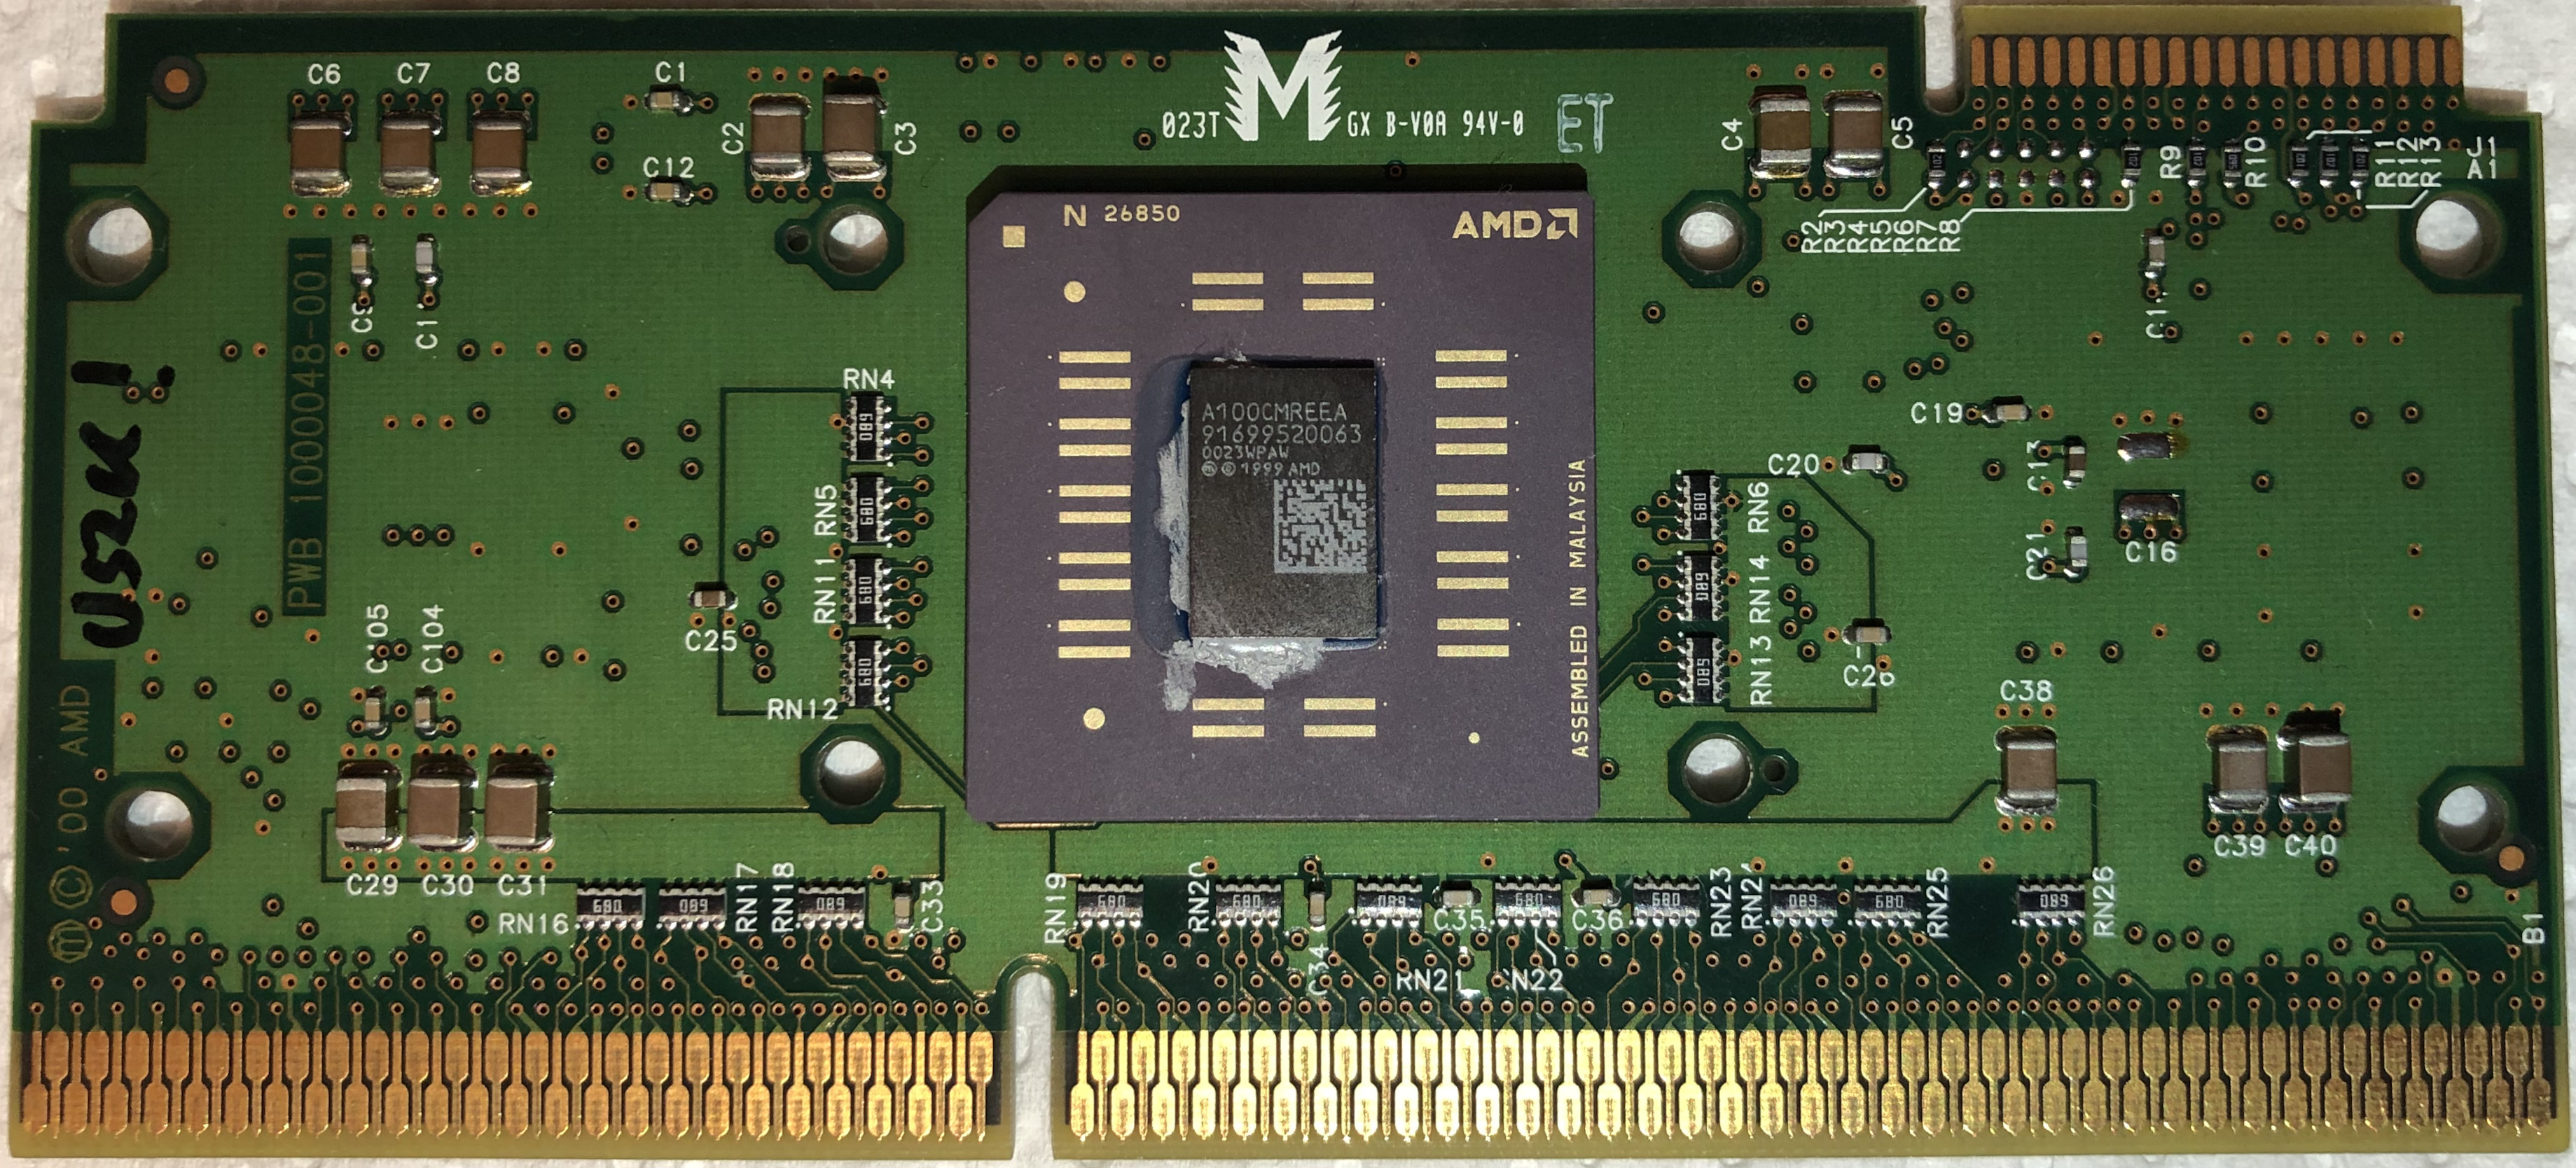 AMD-A1000MMR24B_A_top_side.jpg